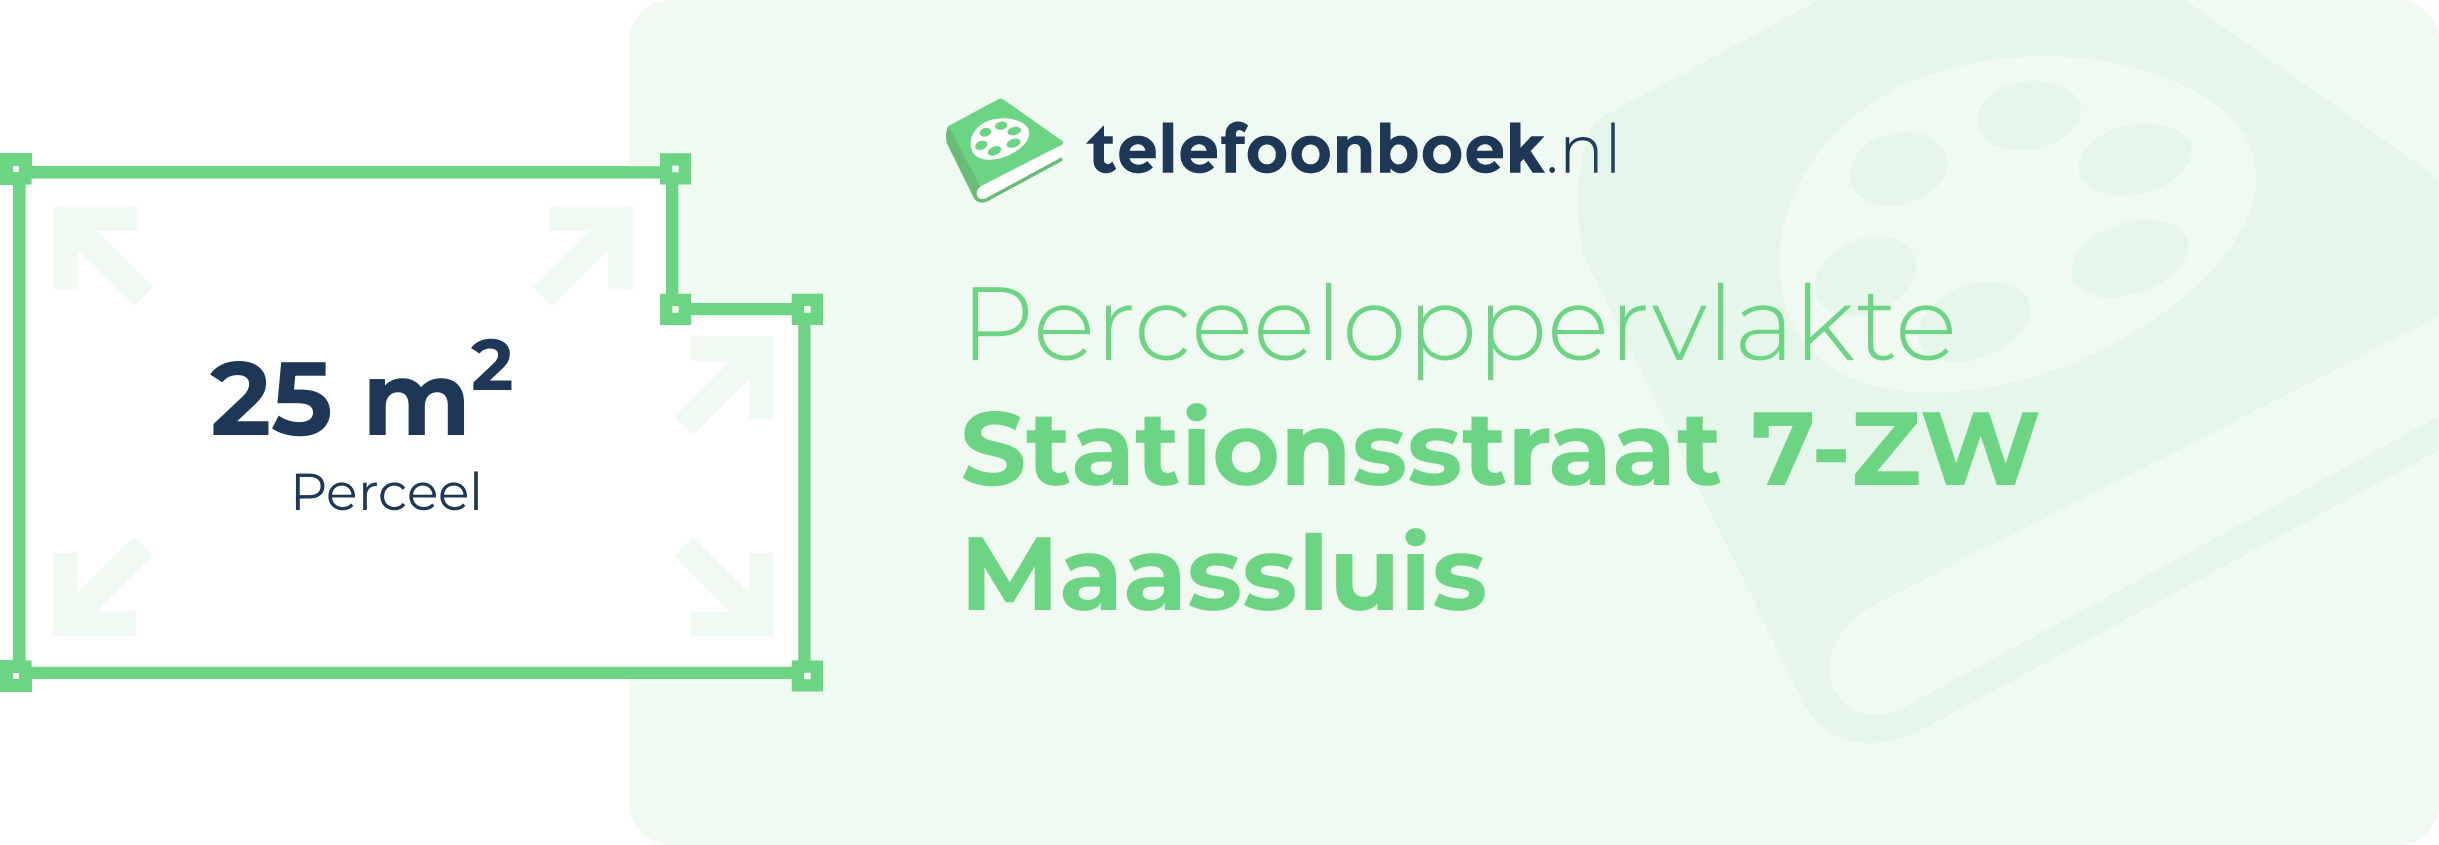 Perceeloppervlakte Stationsstraat 7-ZW Maassluis